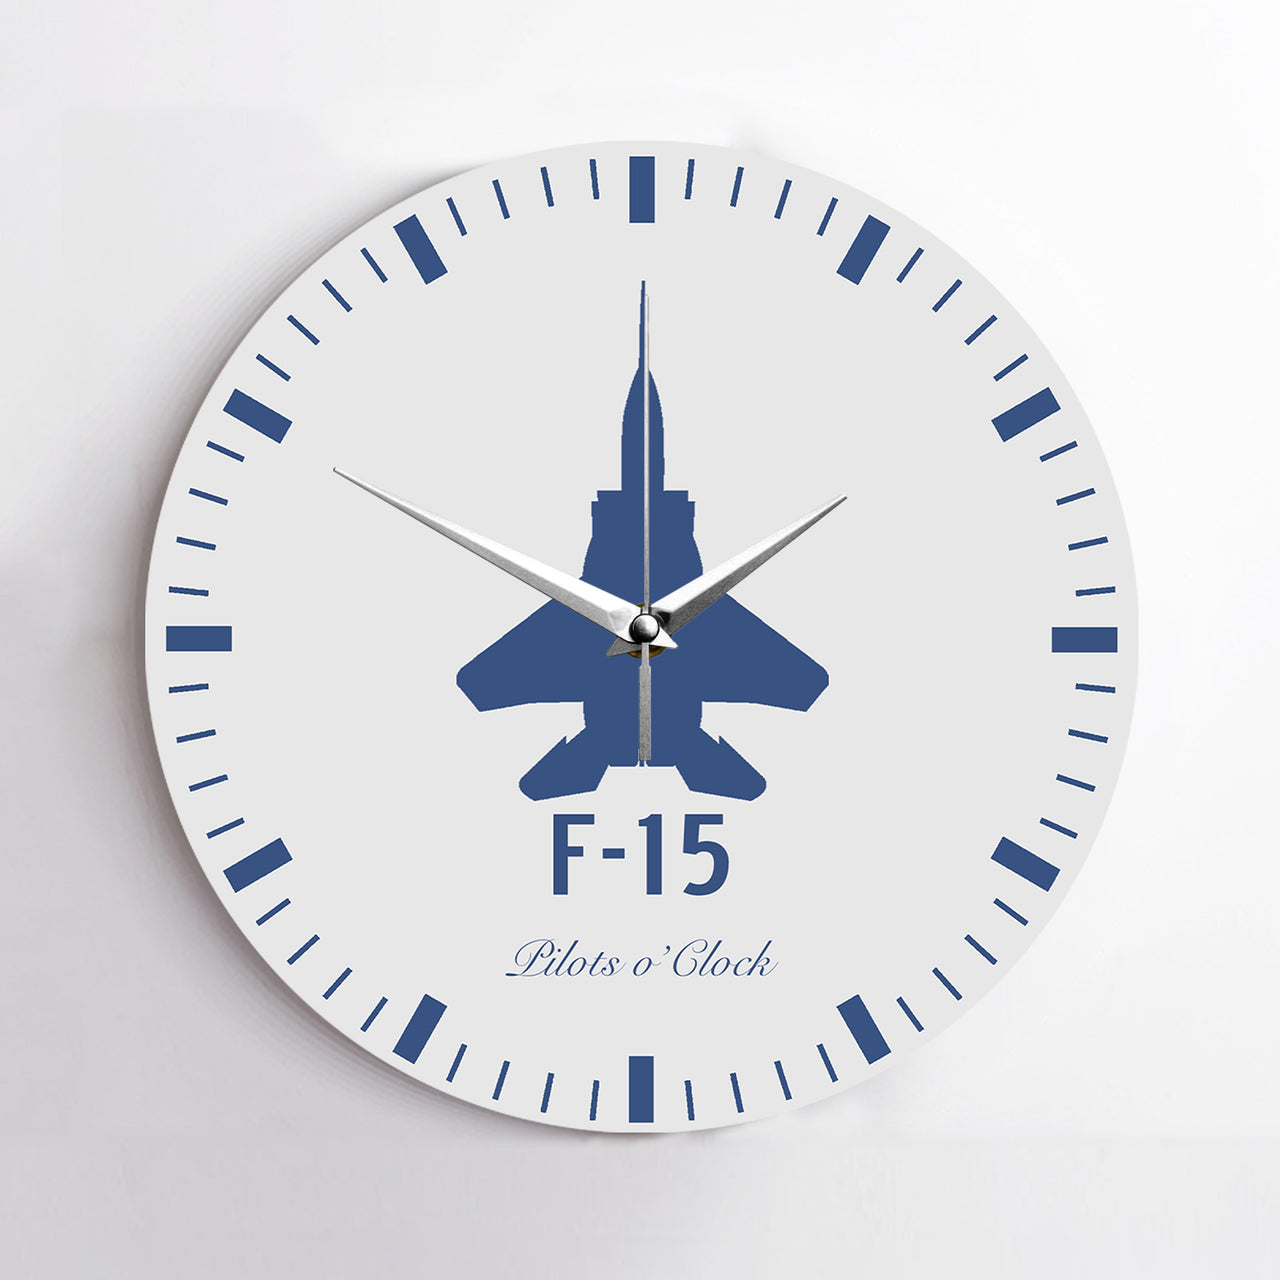 Fighting Falcon F-15 Printed Wall Clocks